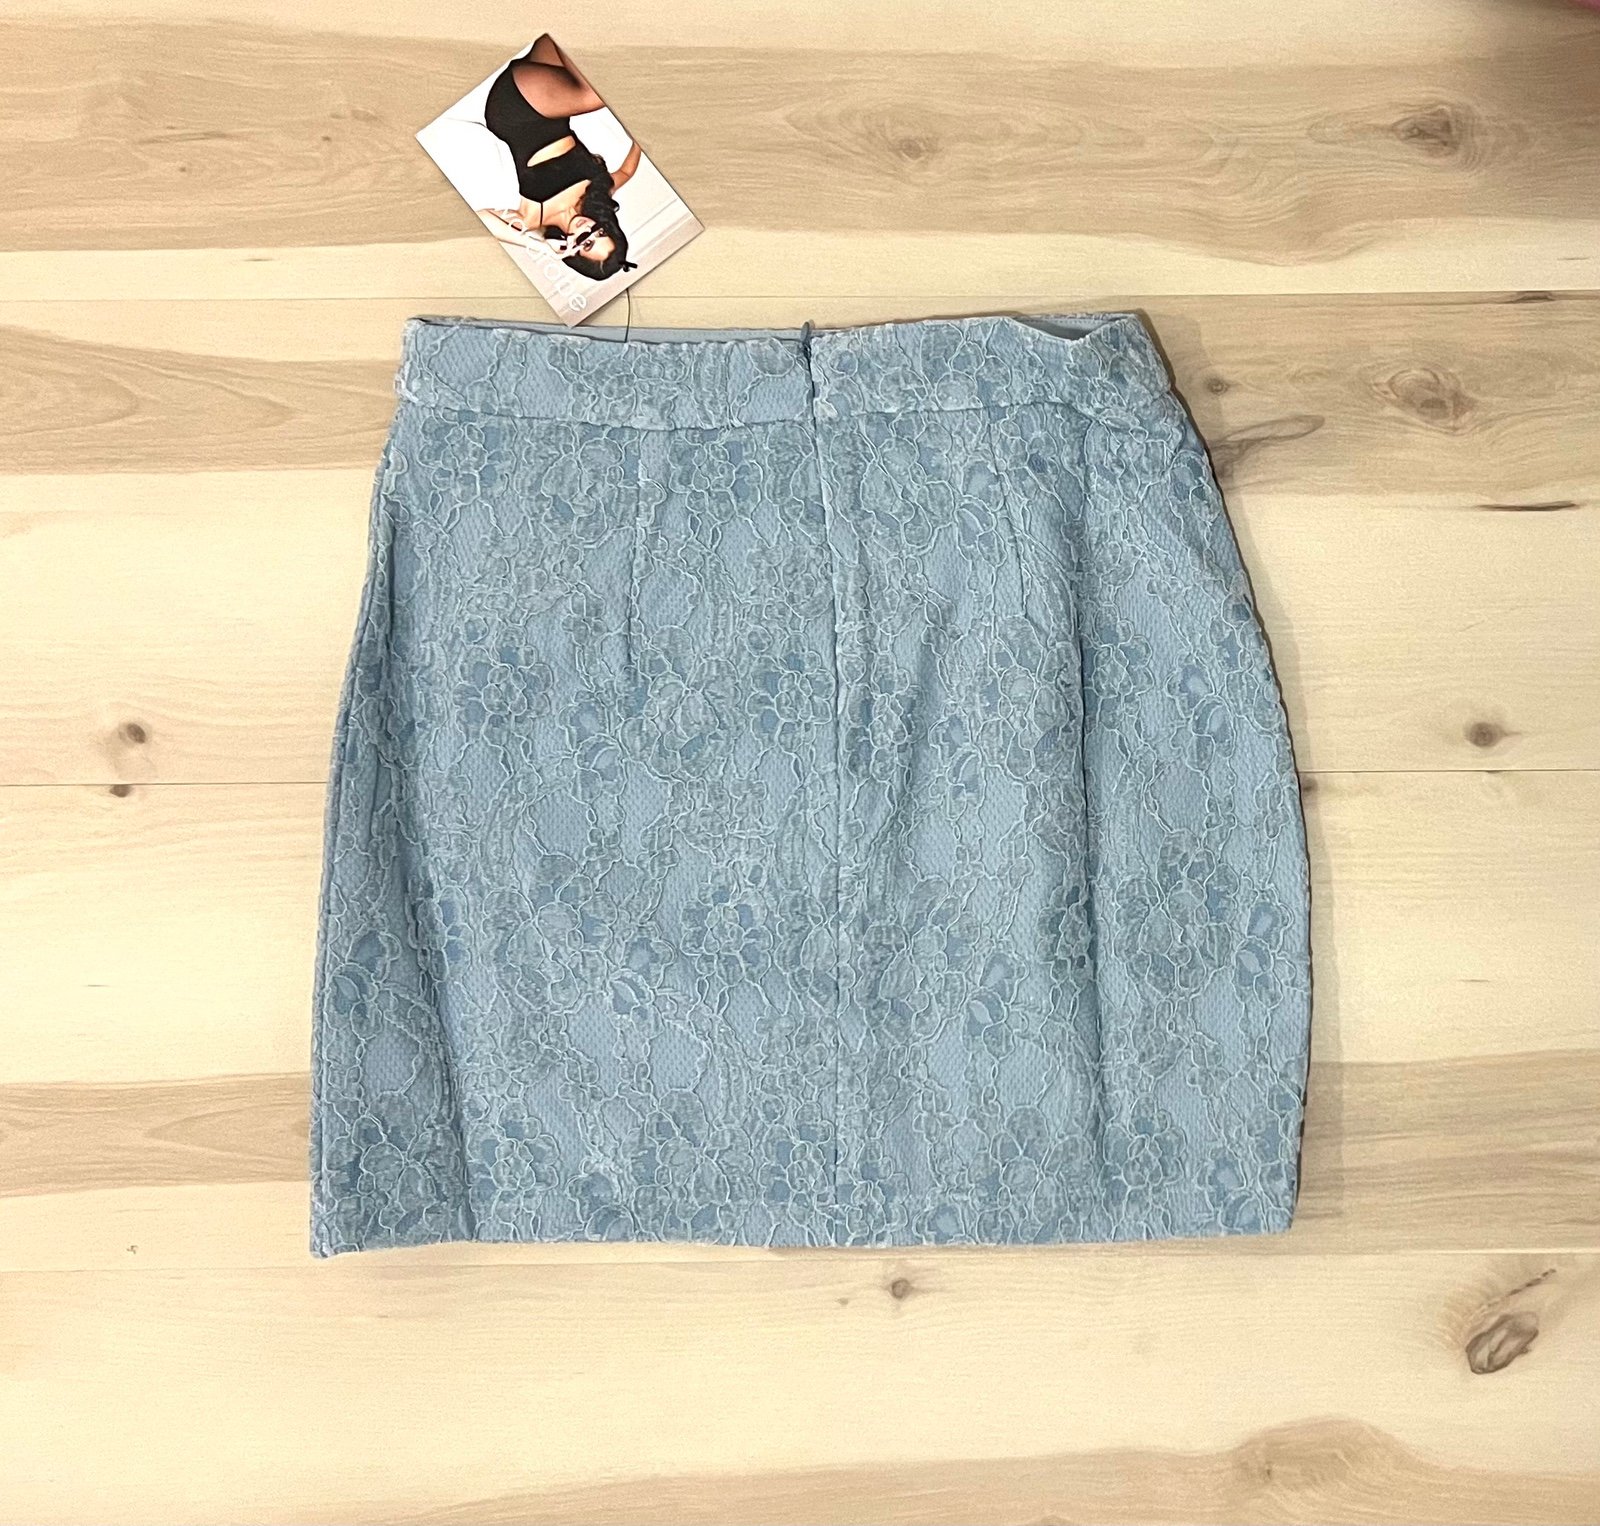 Buy Naked Wardrobe NWT Women Blue Velvet Floral Lace Mini Skirt Size Small fFctBZnXo Online Exclusive